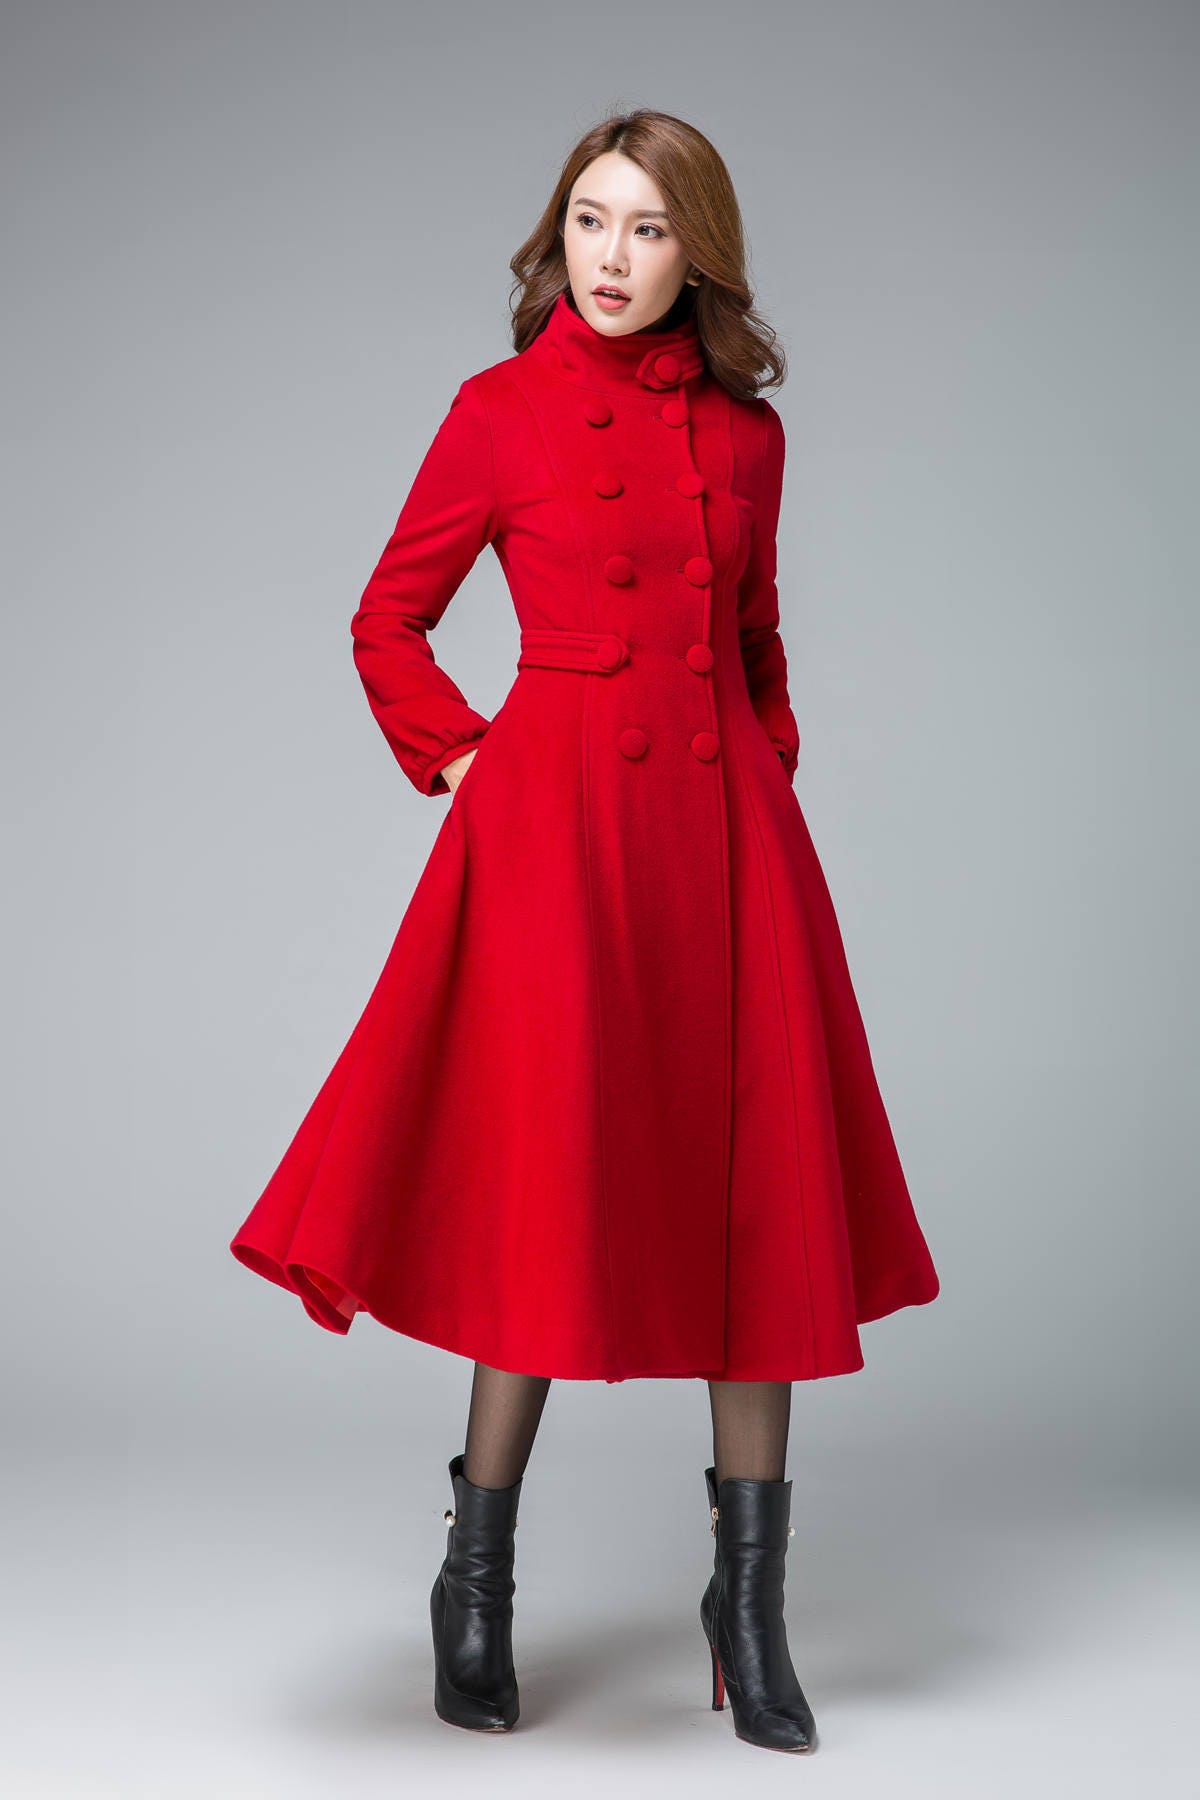 Womens dress coats in 13 amazing winter colors - Free test coat